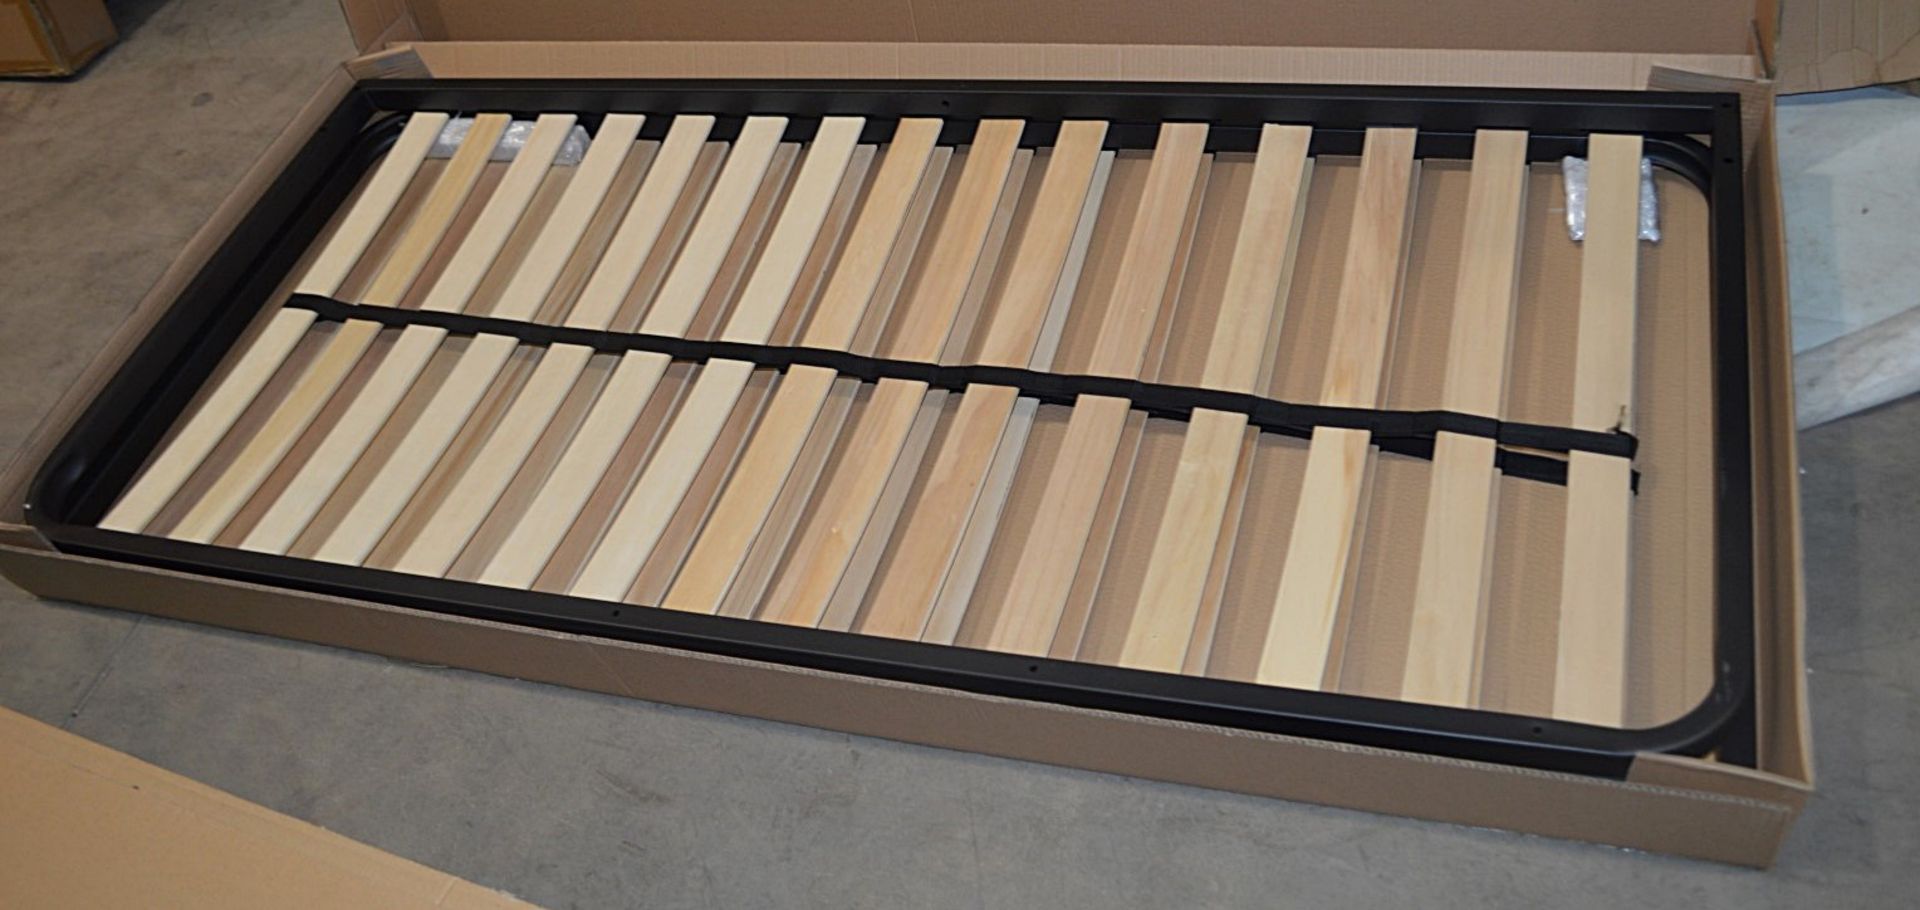 1 x TEMPUR Horton Ottoman Superking Bed Frame - Dimensions: 180 x 200cm - Originally RRP £1,649 - Image 6 of 12